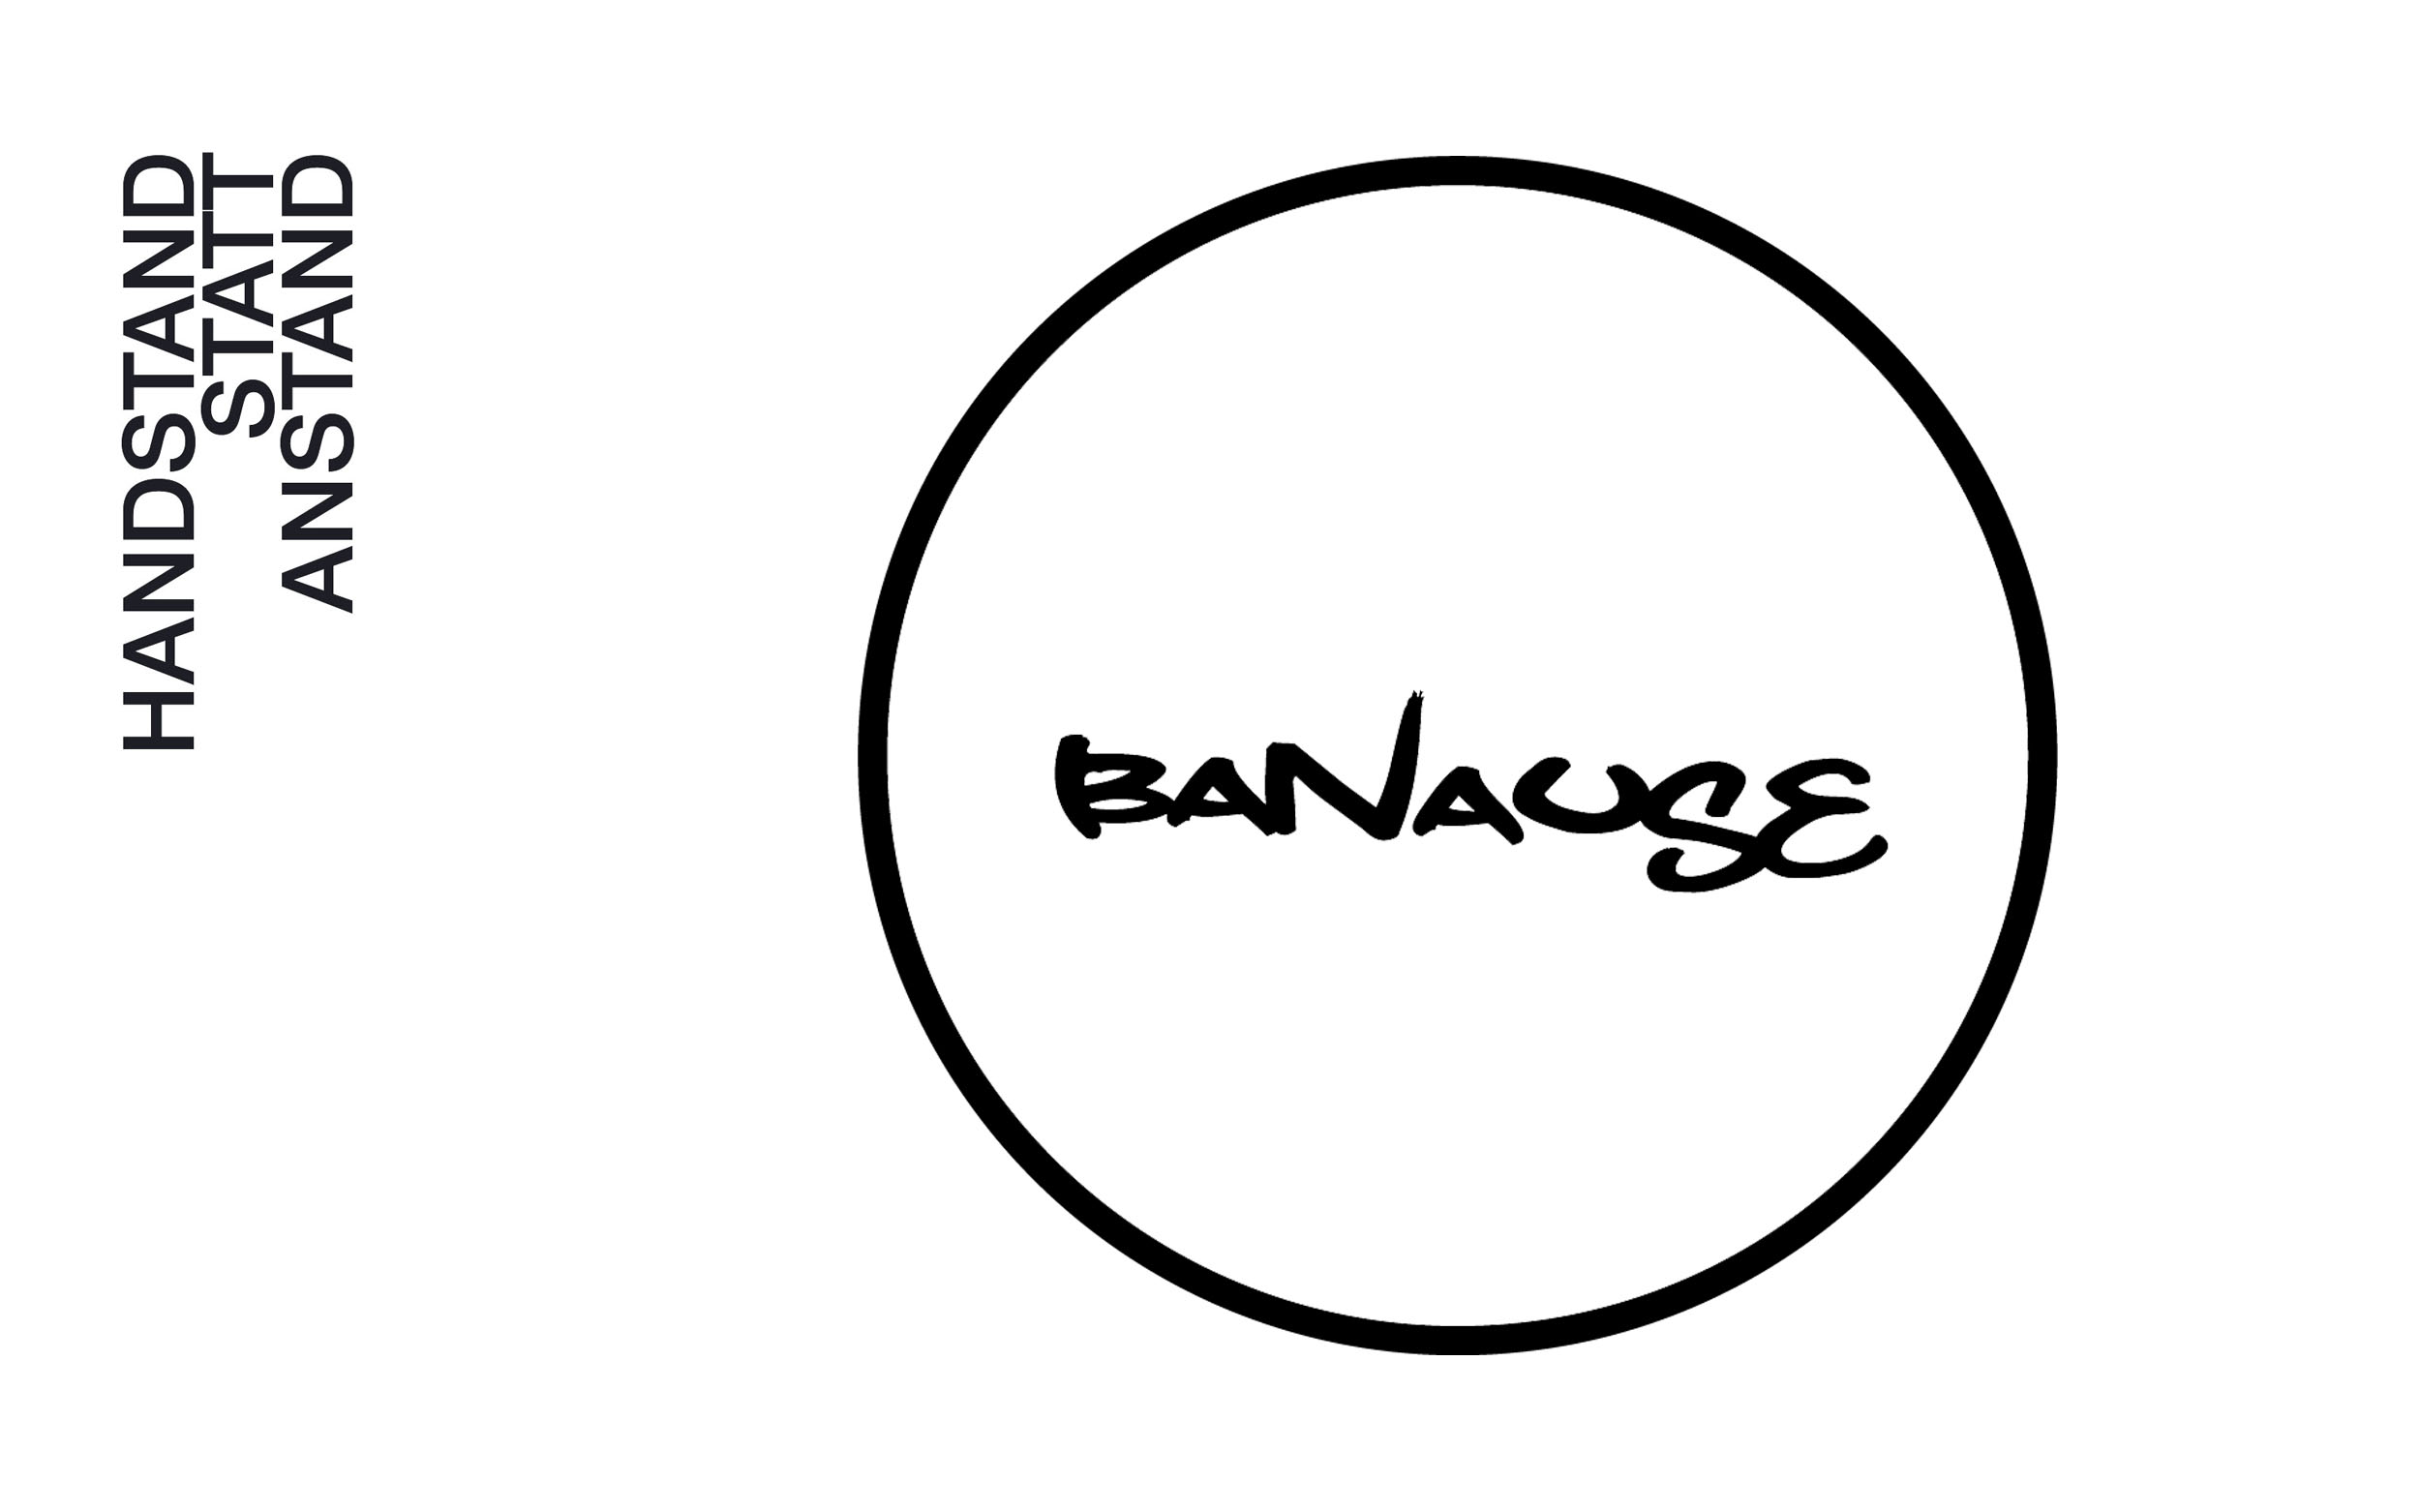 banause-basecap-handstand